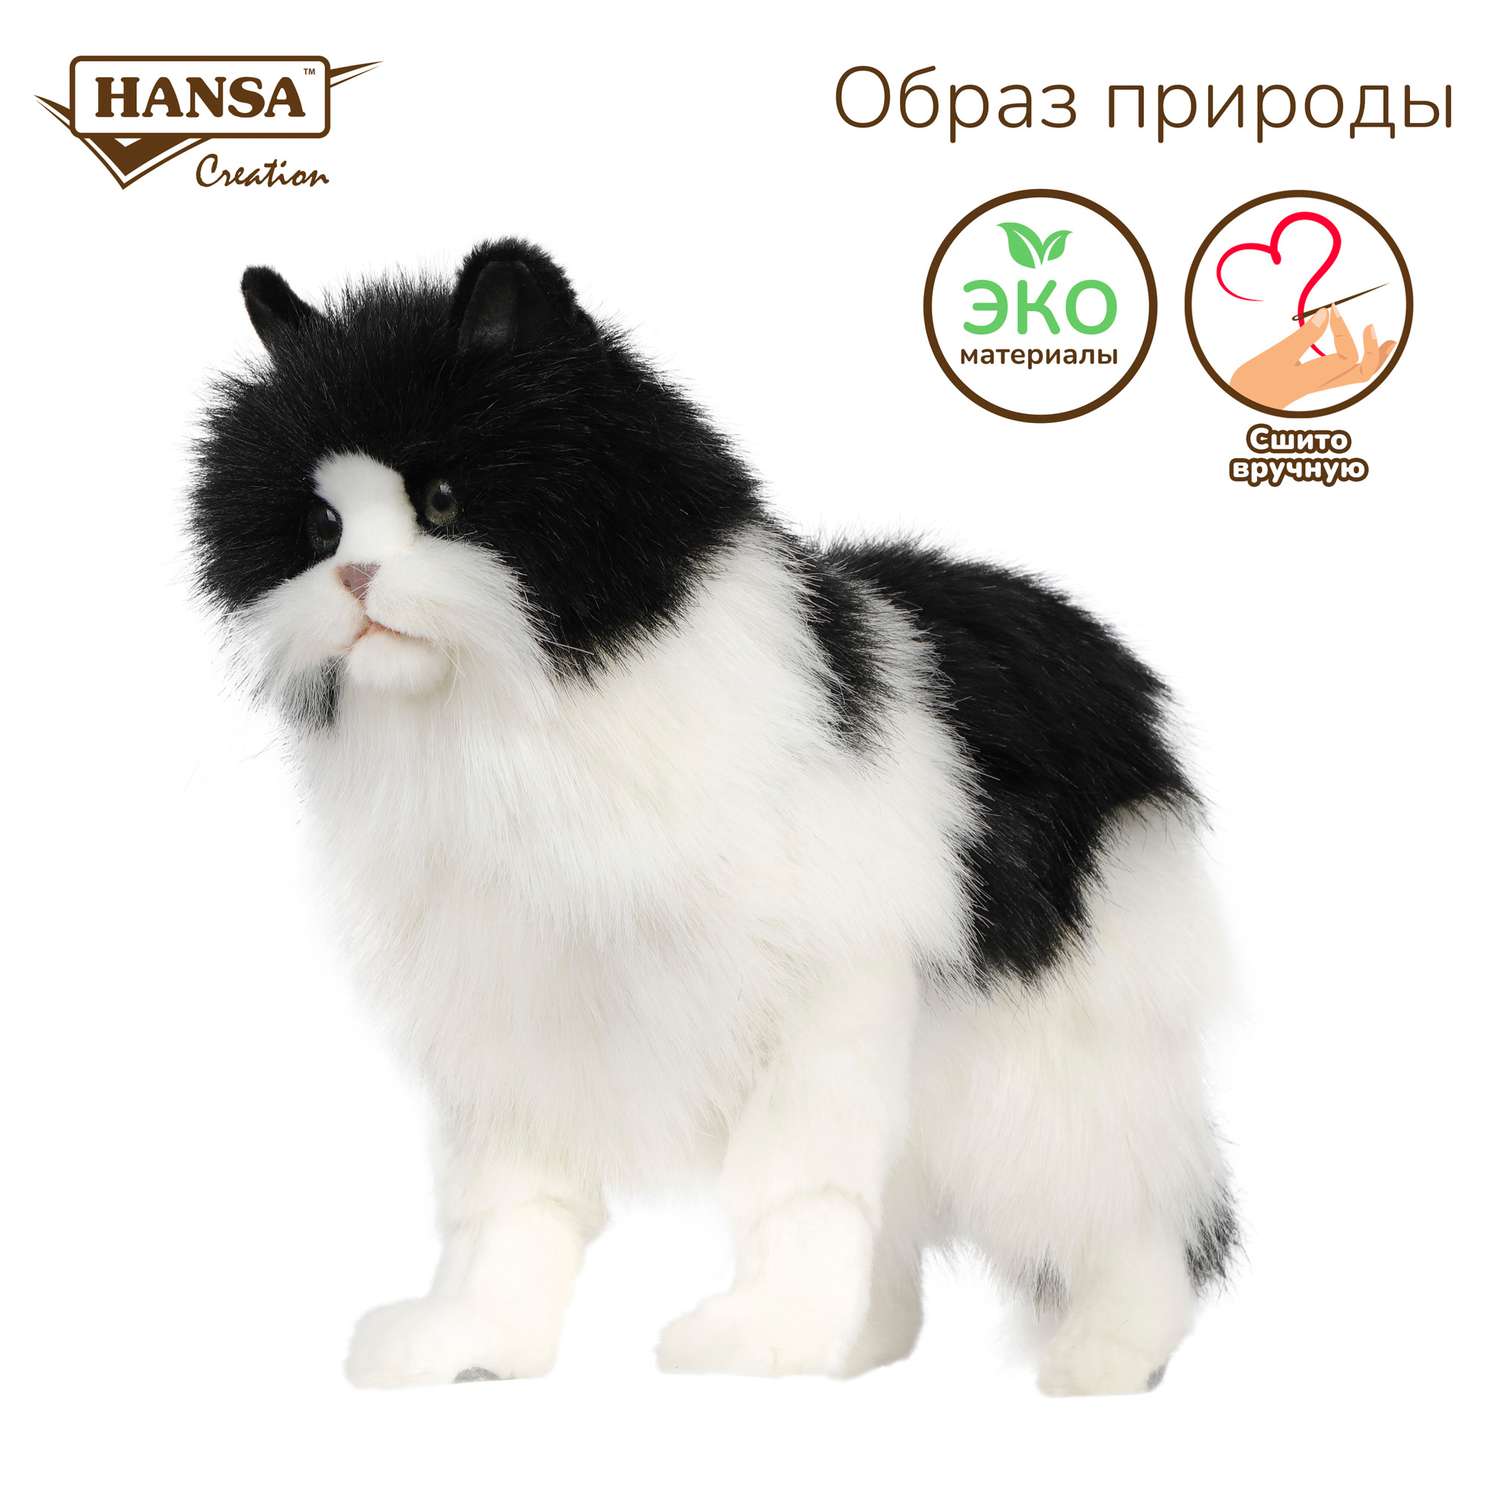 Реалистичная игрушка HANSA Кошка чёрно-белая 46 см - фото 3